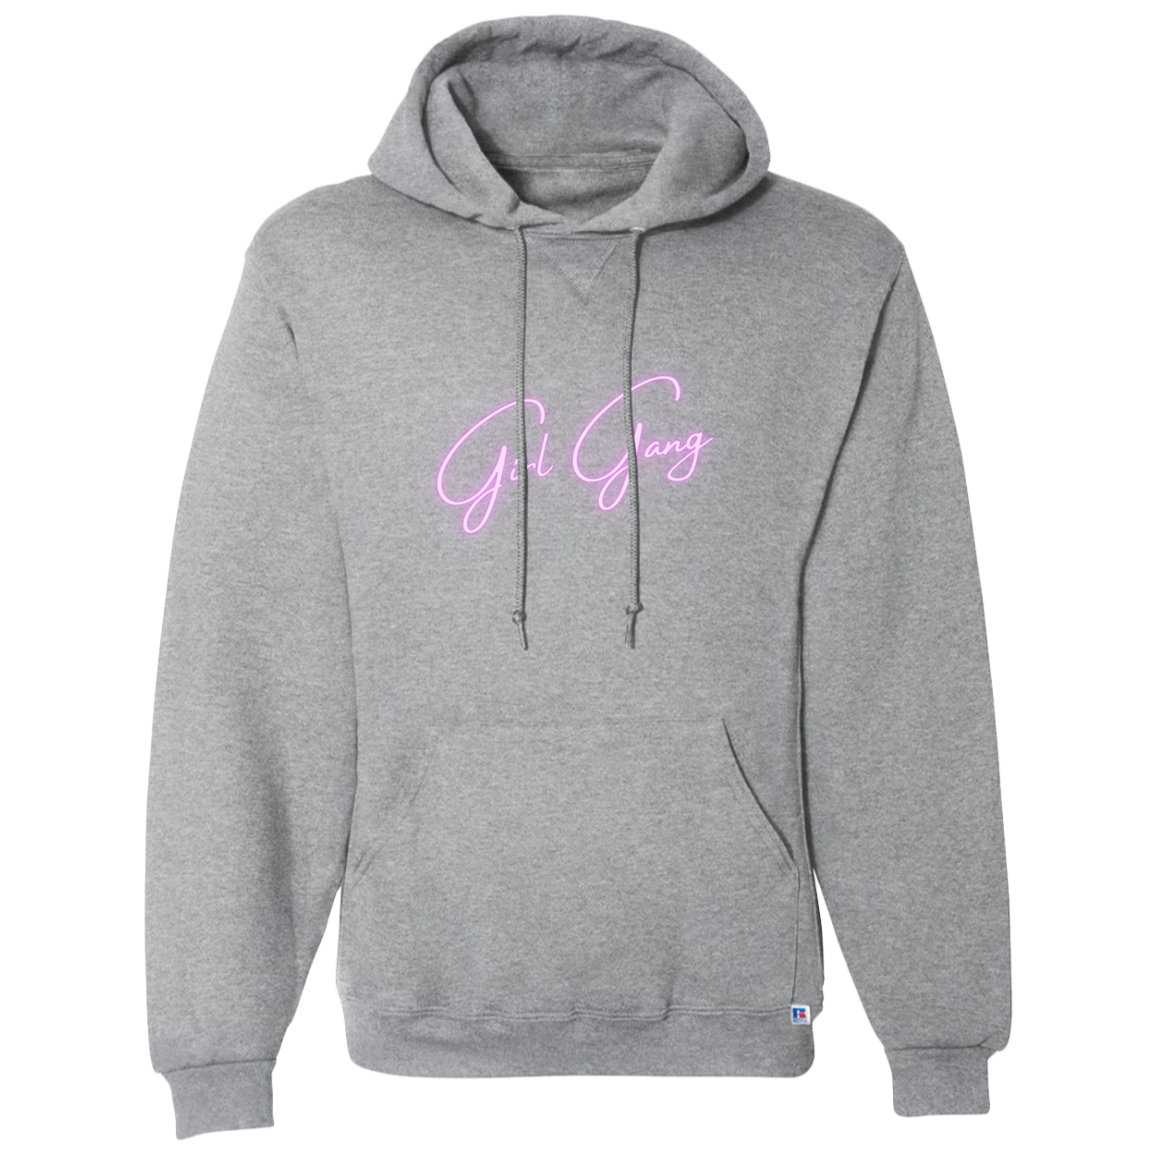 Girl Gang | Dri-Power Fleece Pullover Hoodie